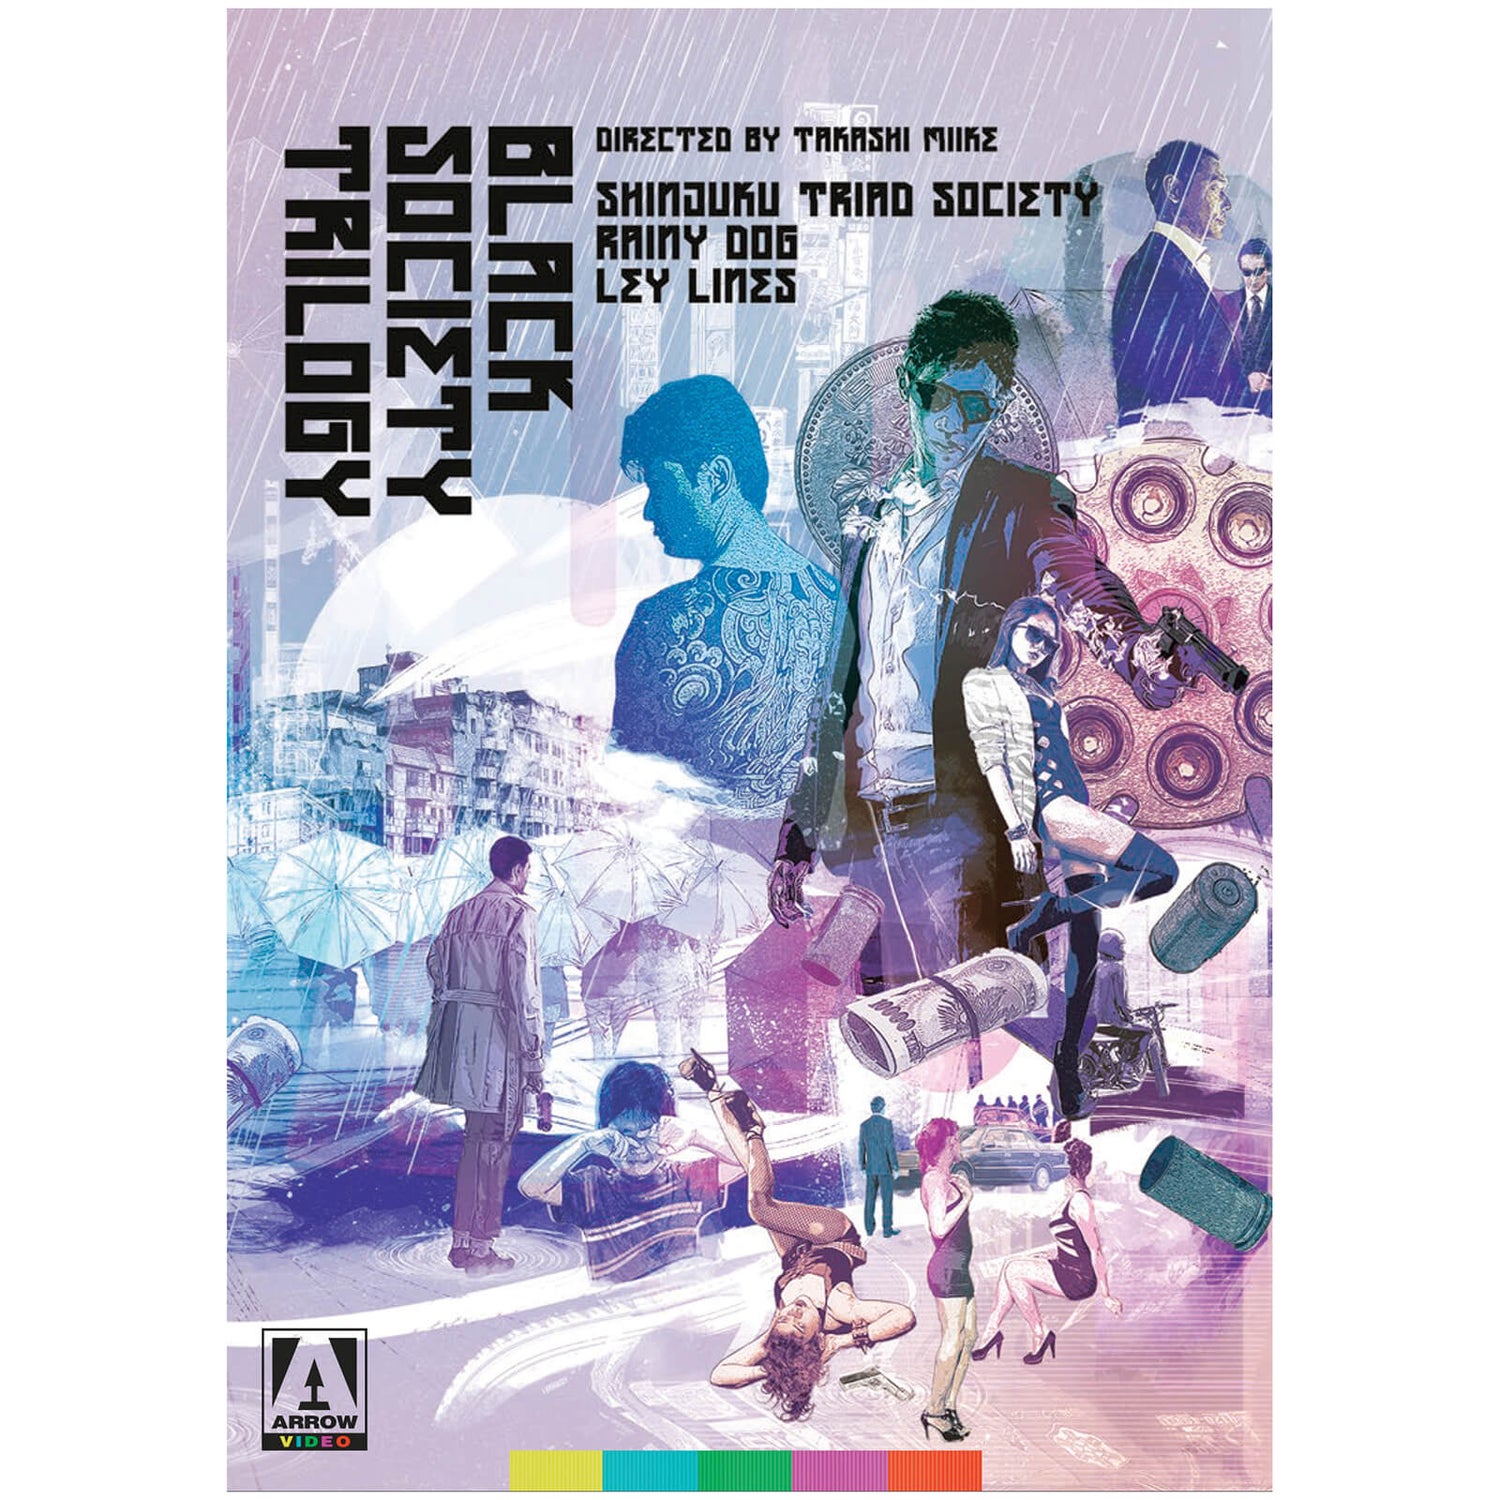 The Black Society Trilogy DVD